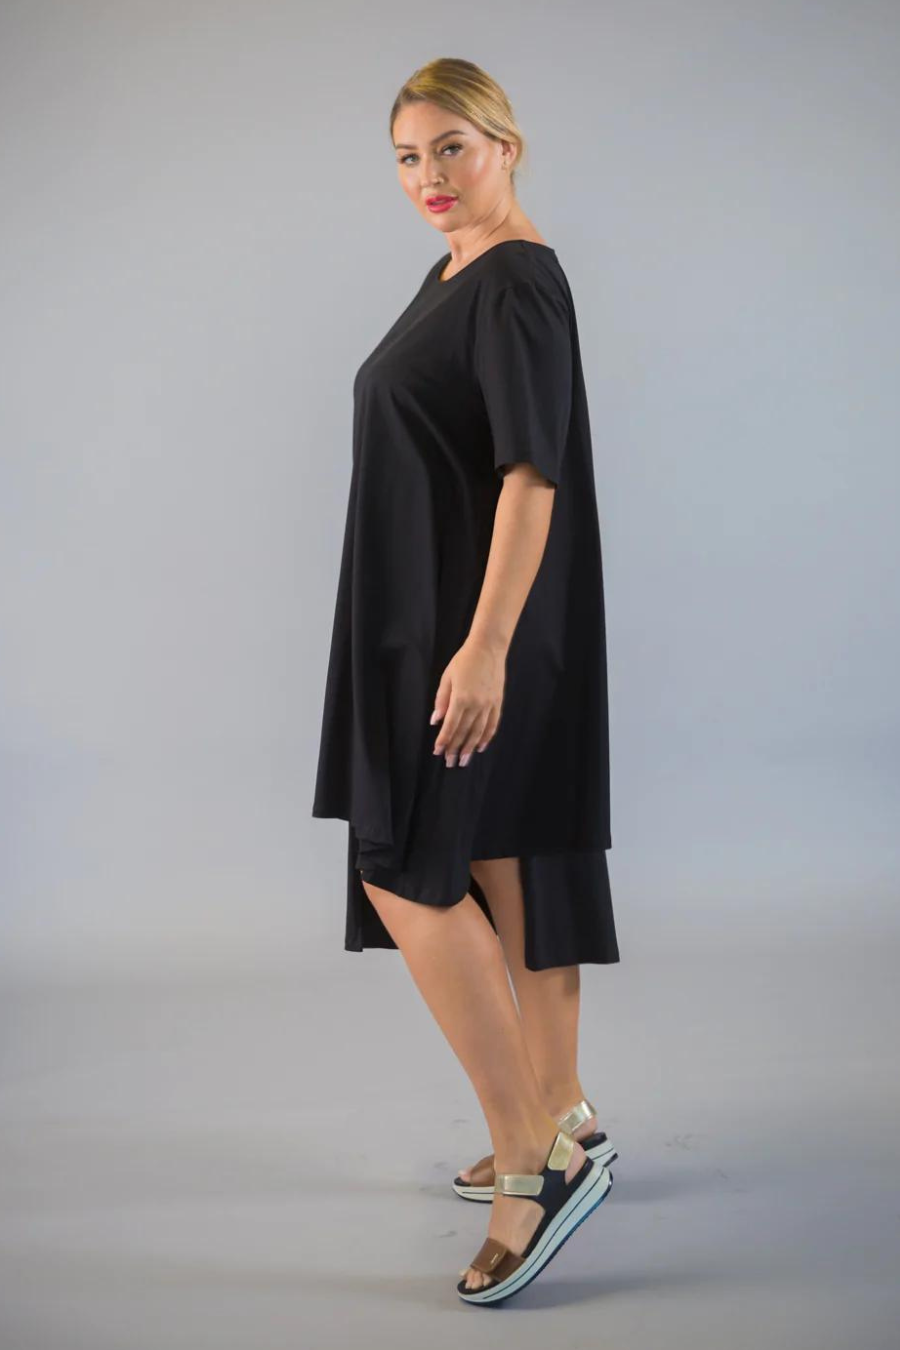 Asymmetric Black Jersey Dress/Tunic